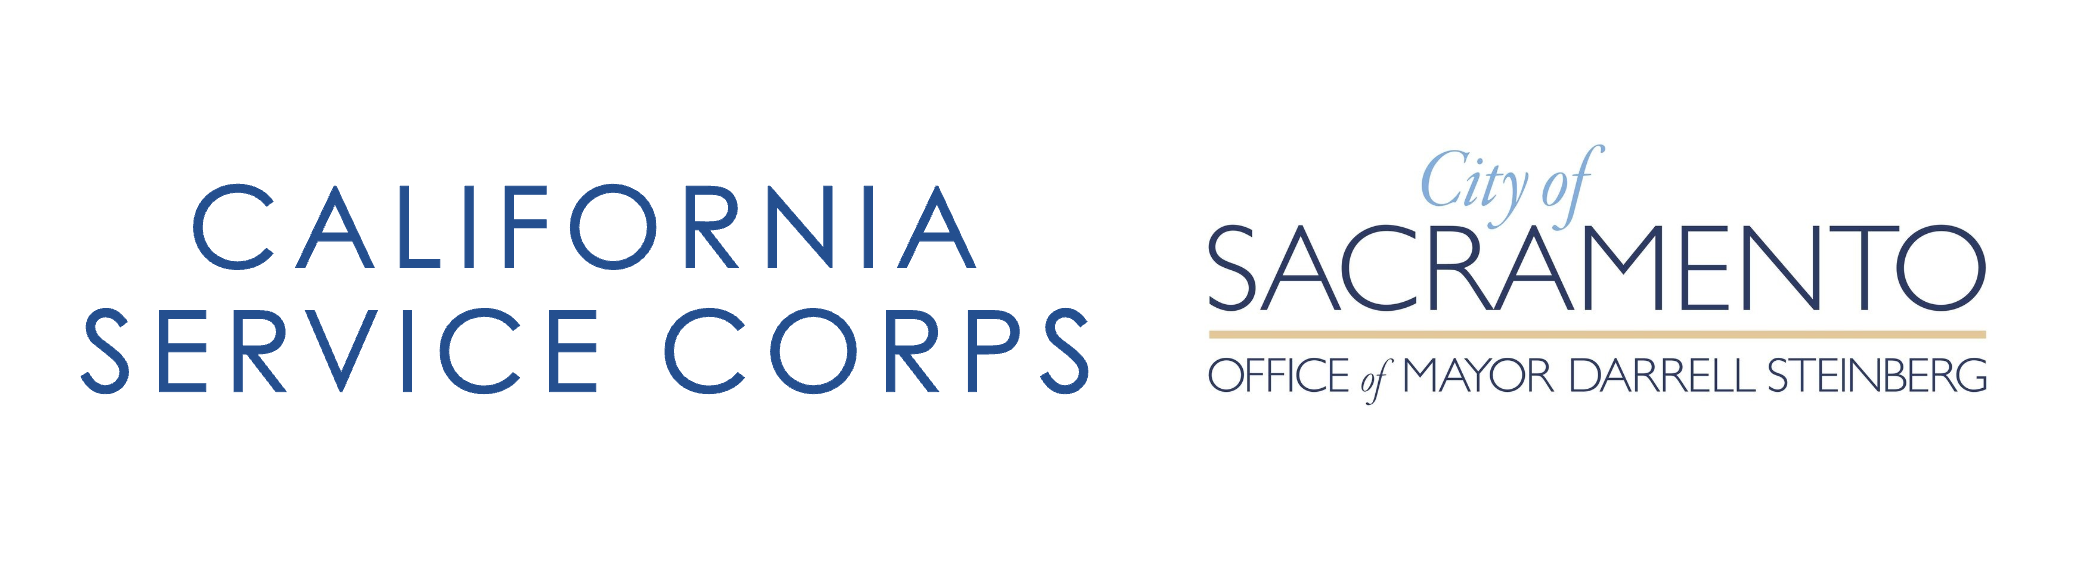 CA Service Corps and City of Sacramento logo lockup